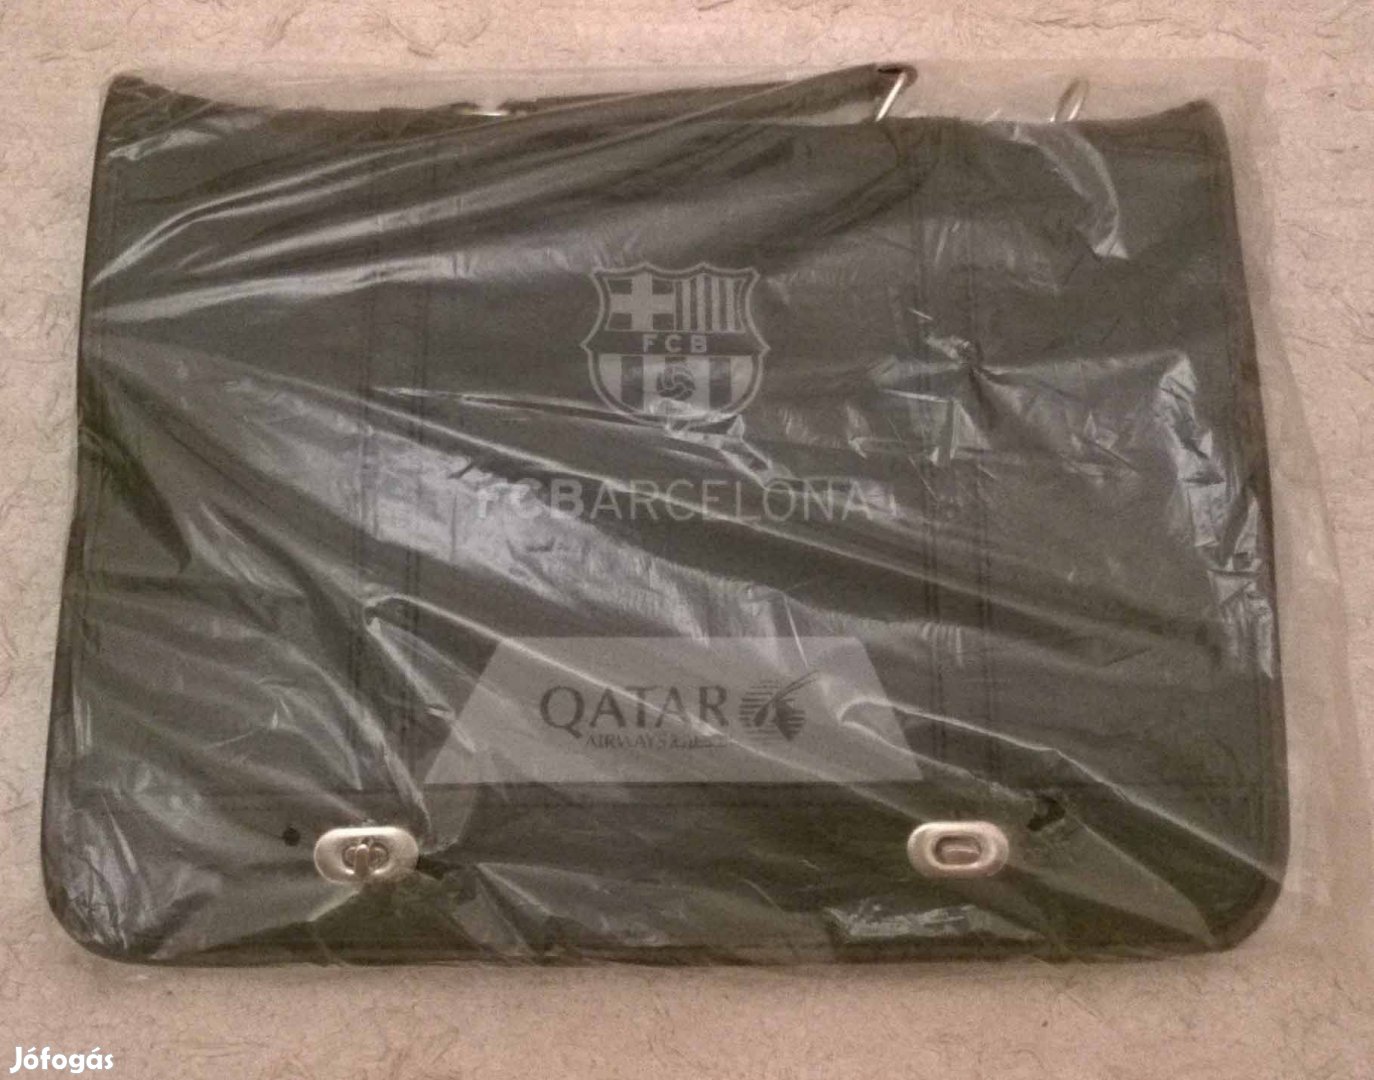 FC Barcelona/Qatar műbőr táska